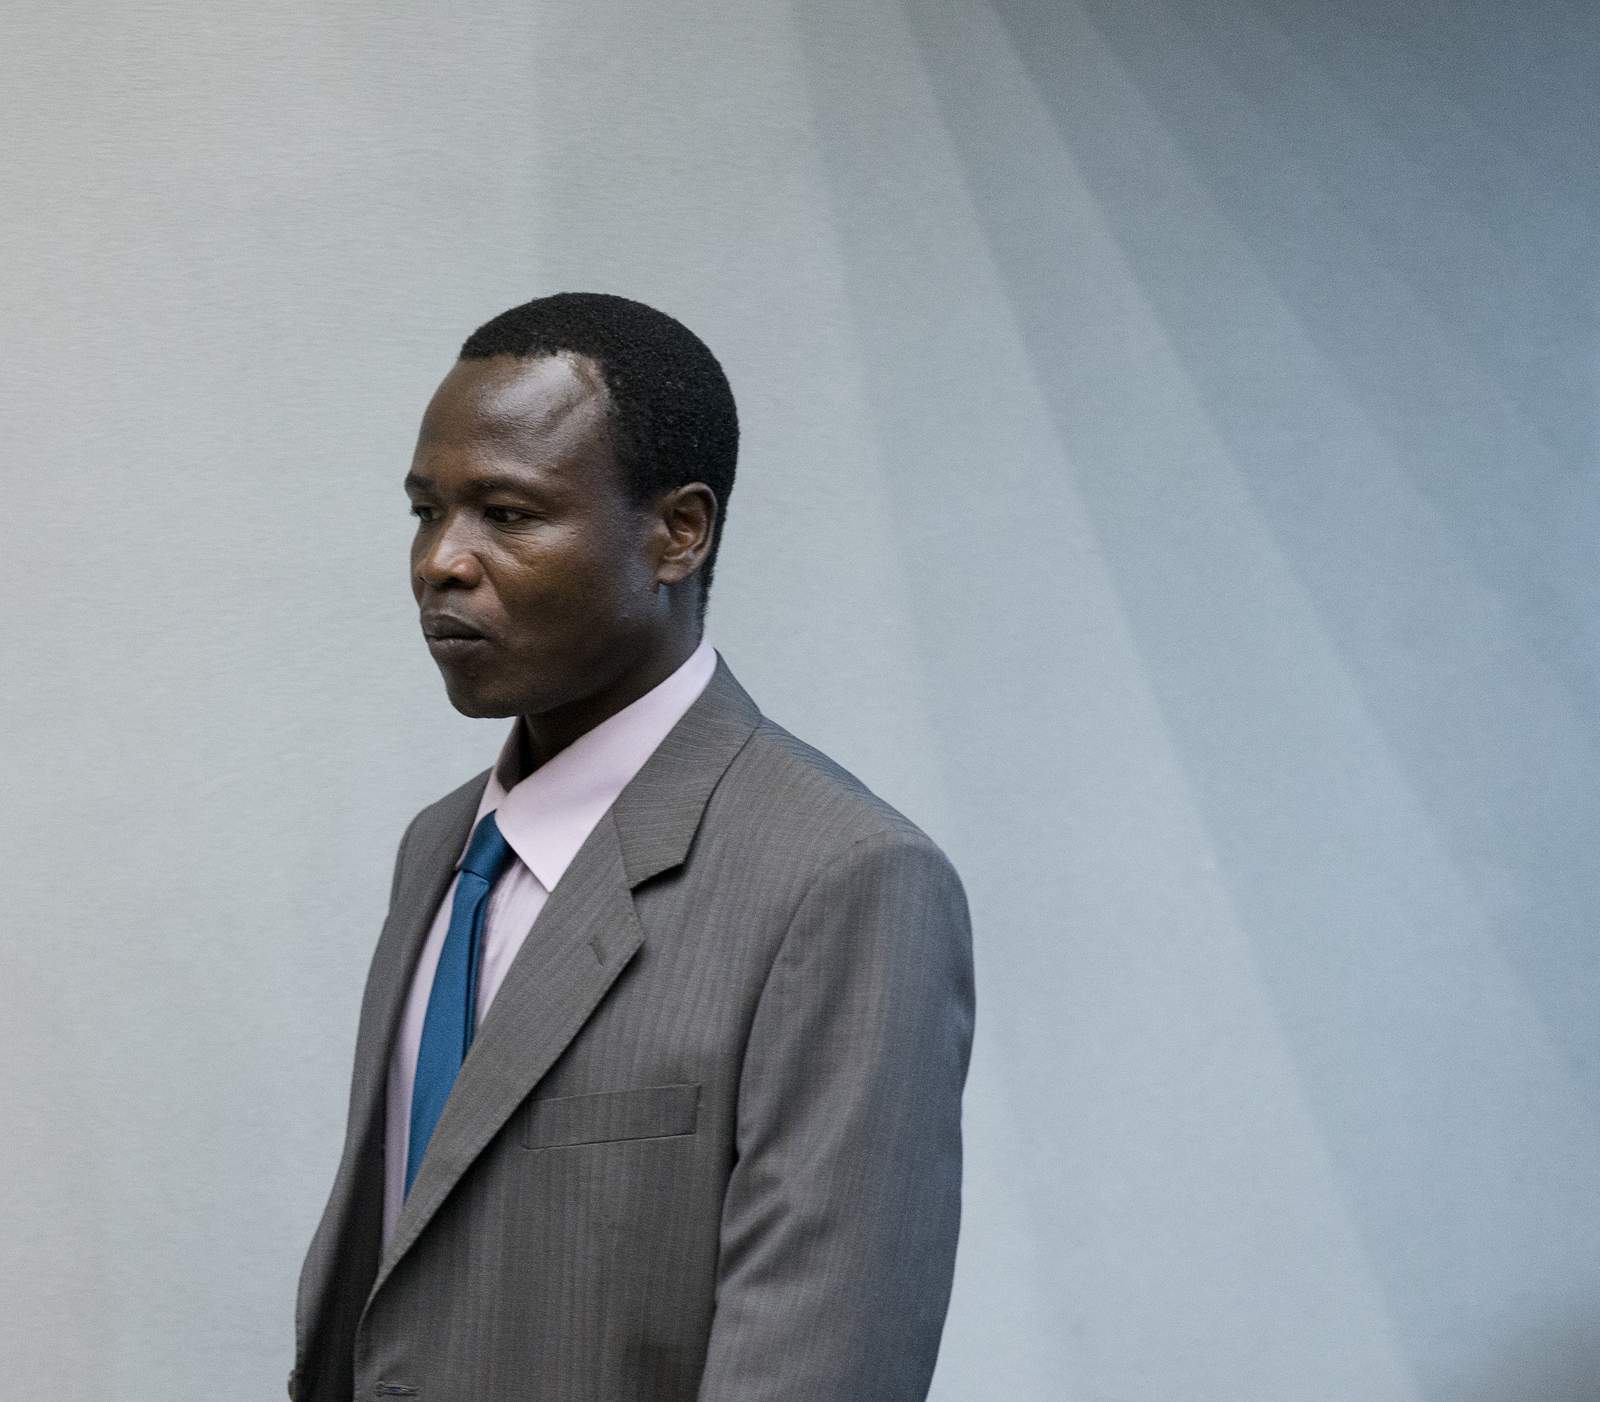 ICC convicts Ugandan rebel commander of war crimes